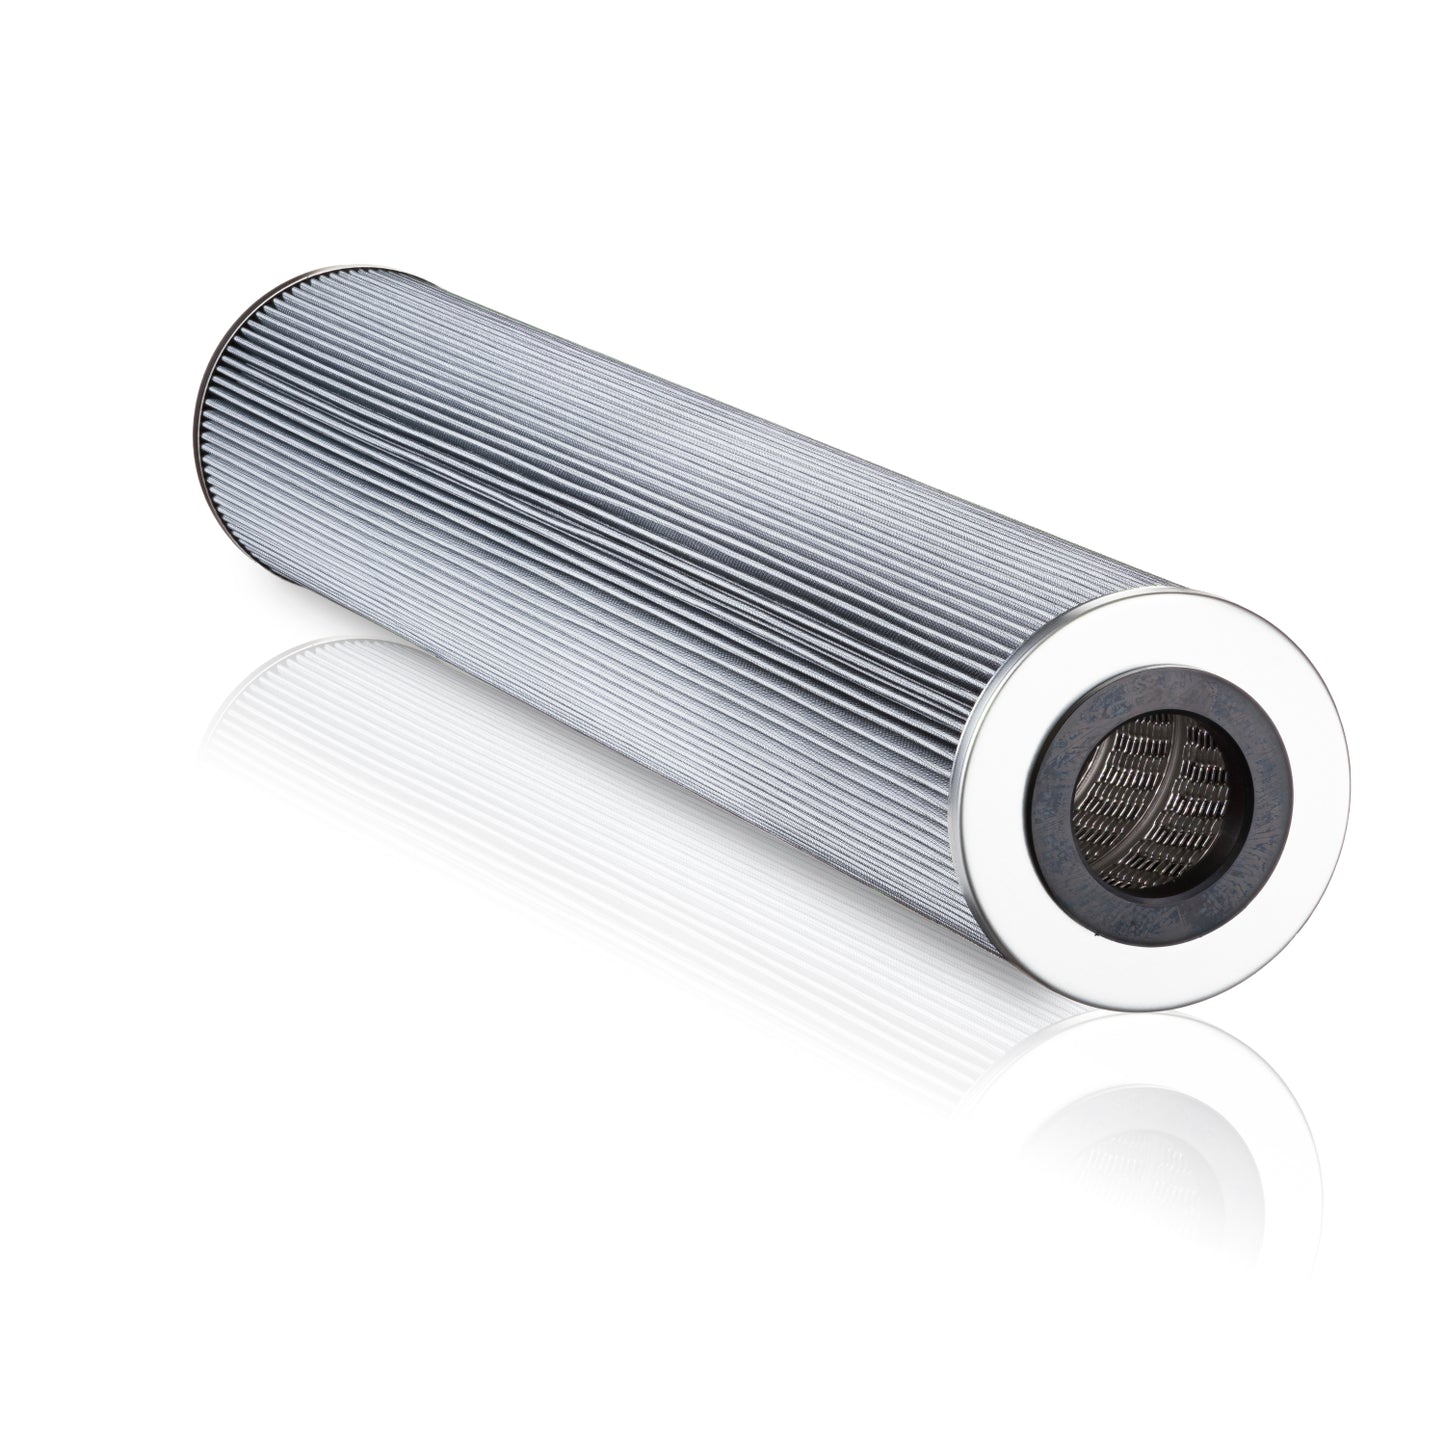 Cartridge Filter Element SF0101-36-12UMRE 12 Micron Microglass